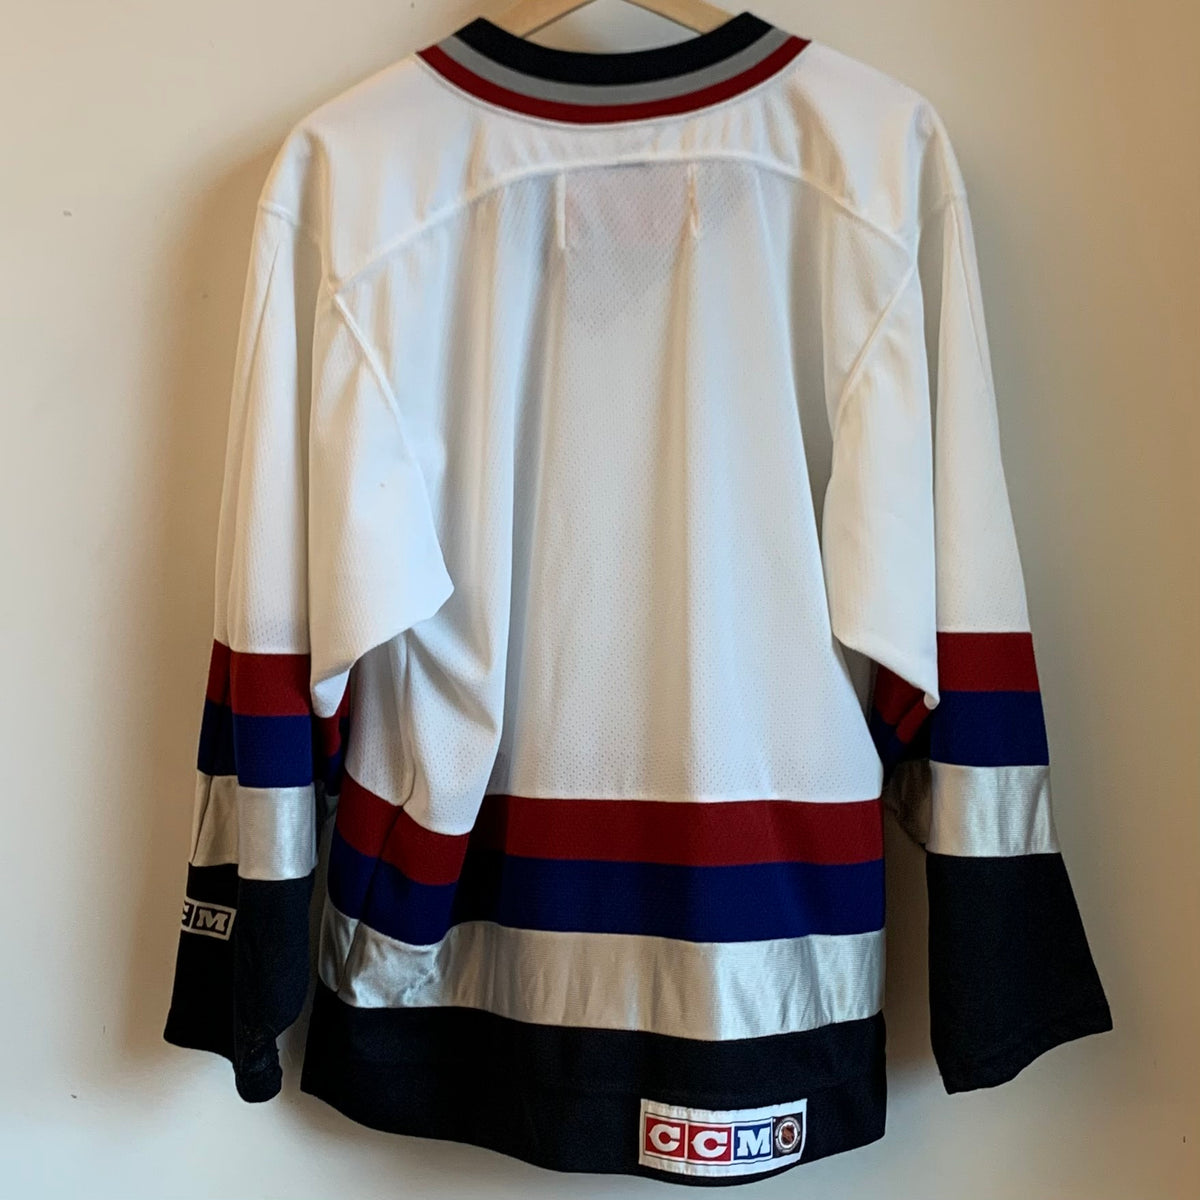 Vintage Montreal Canadiens Hockey Jersey 